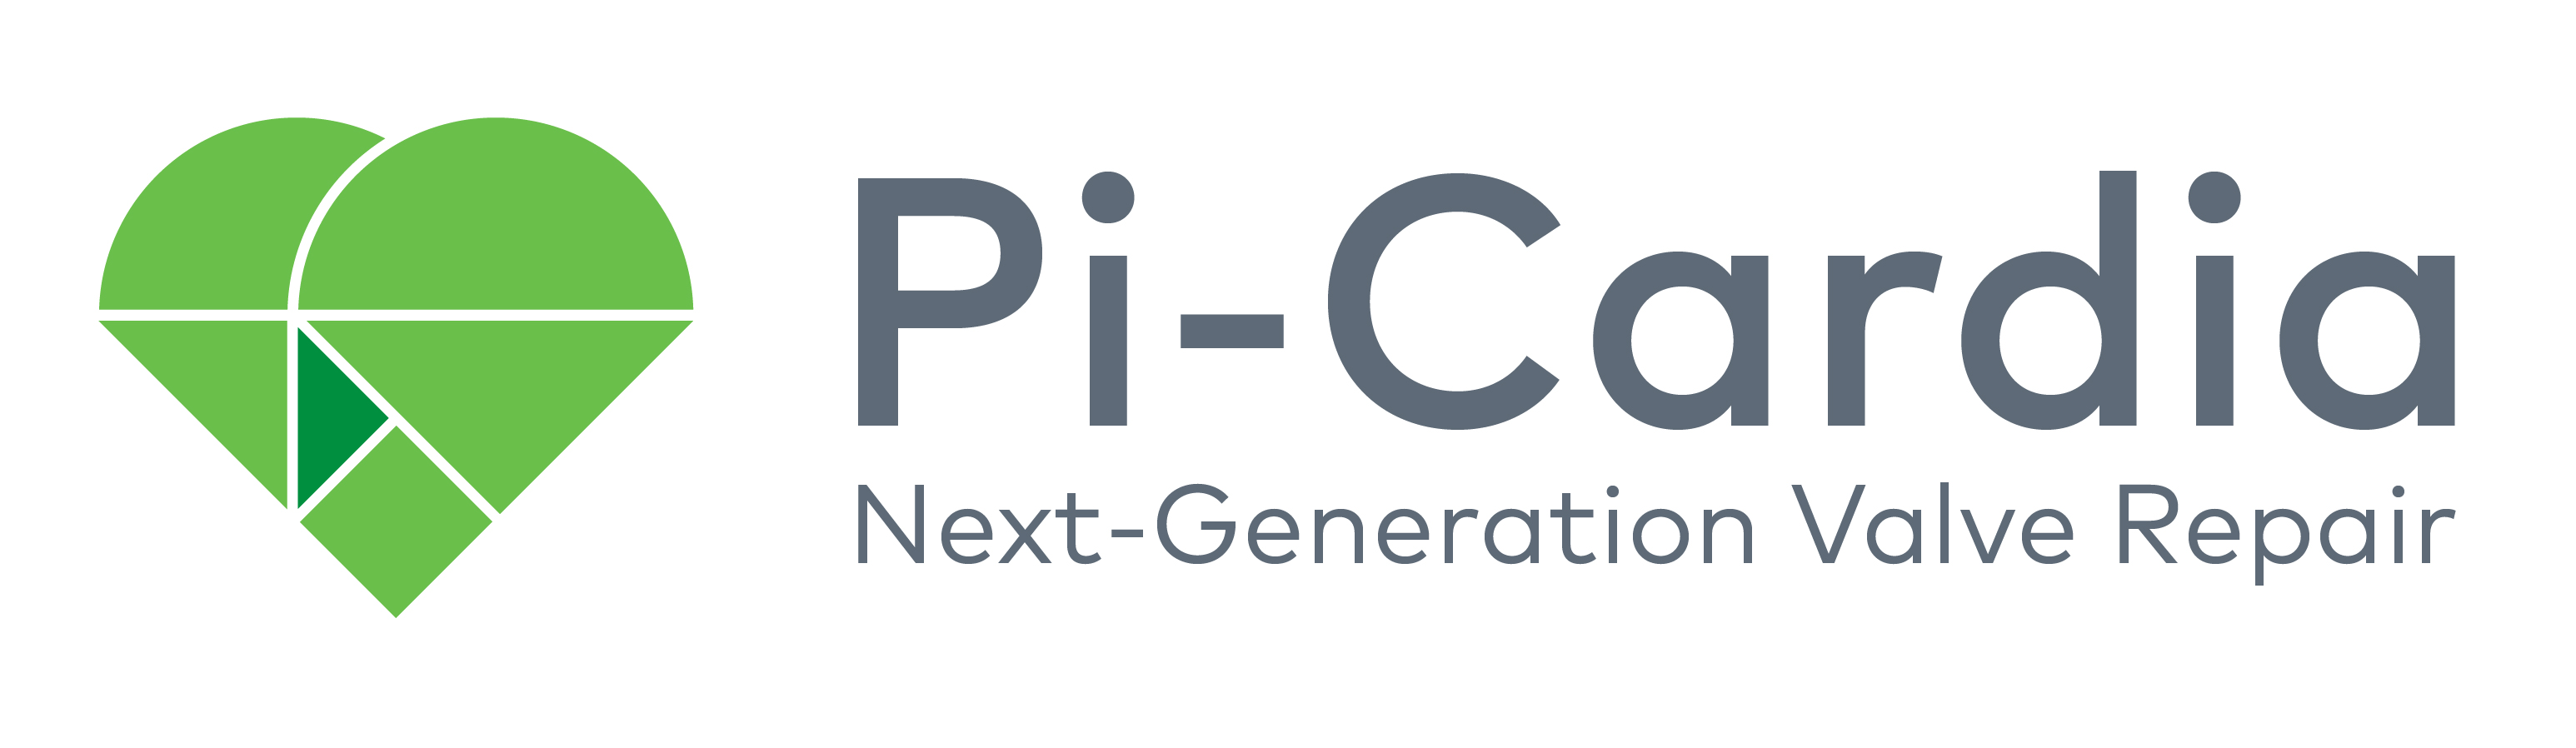 Pi-Cardia Ltd., Monday, August 22, 2022, Press release picture